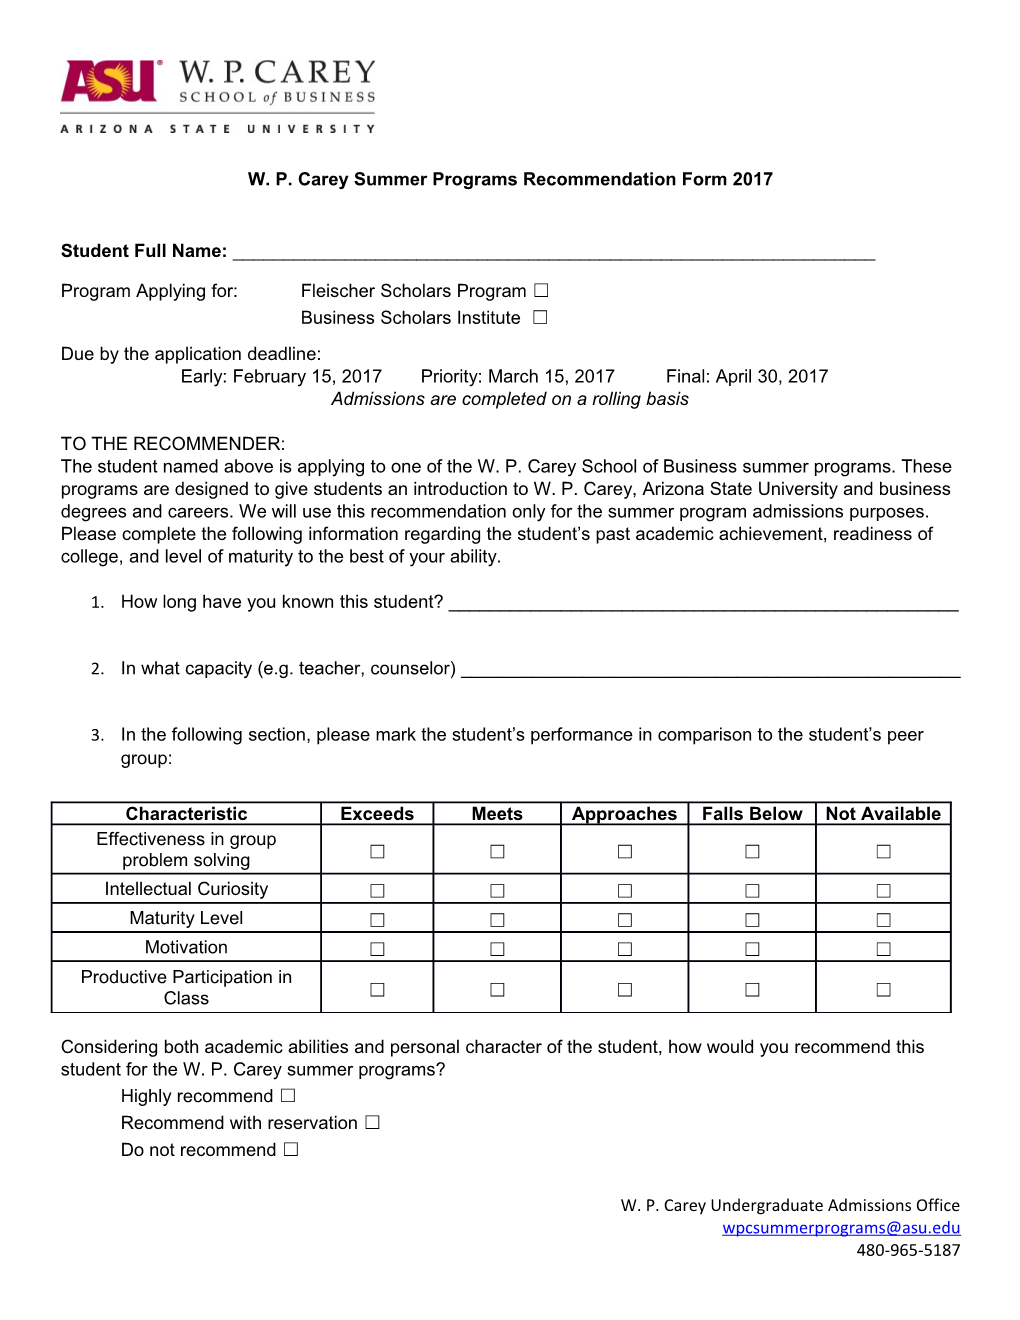 W. P. Carey Summer Programs Recommendation Form 2017